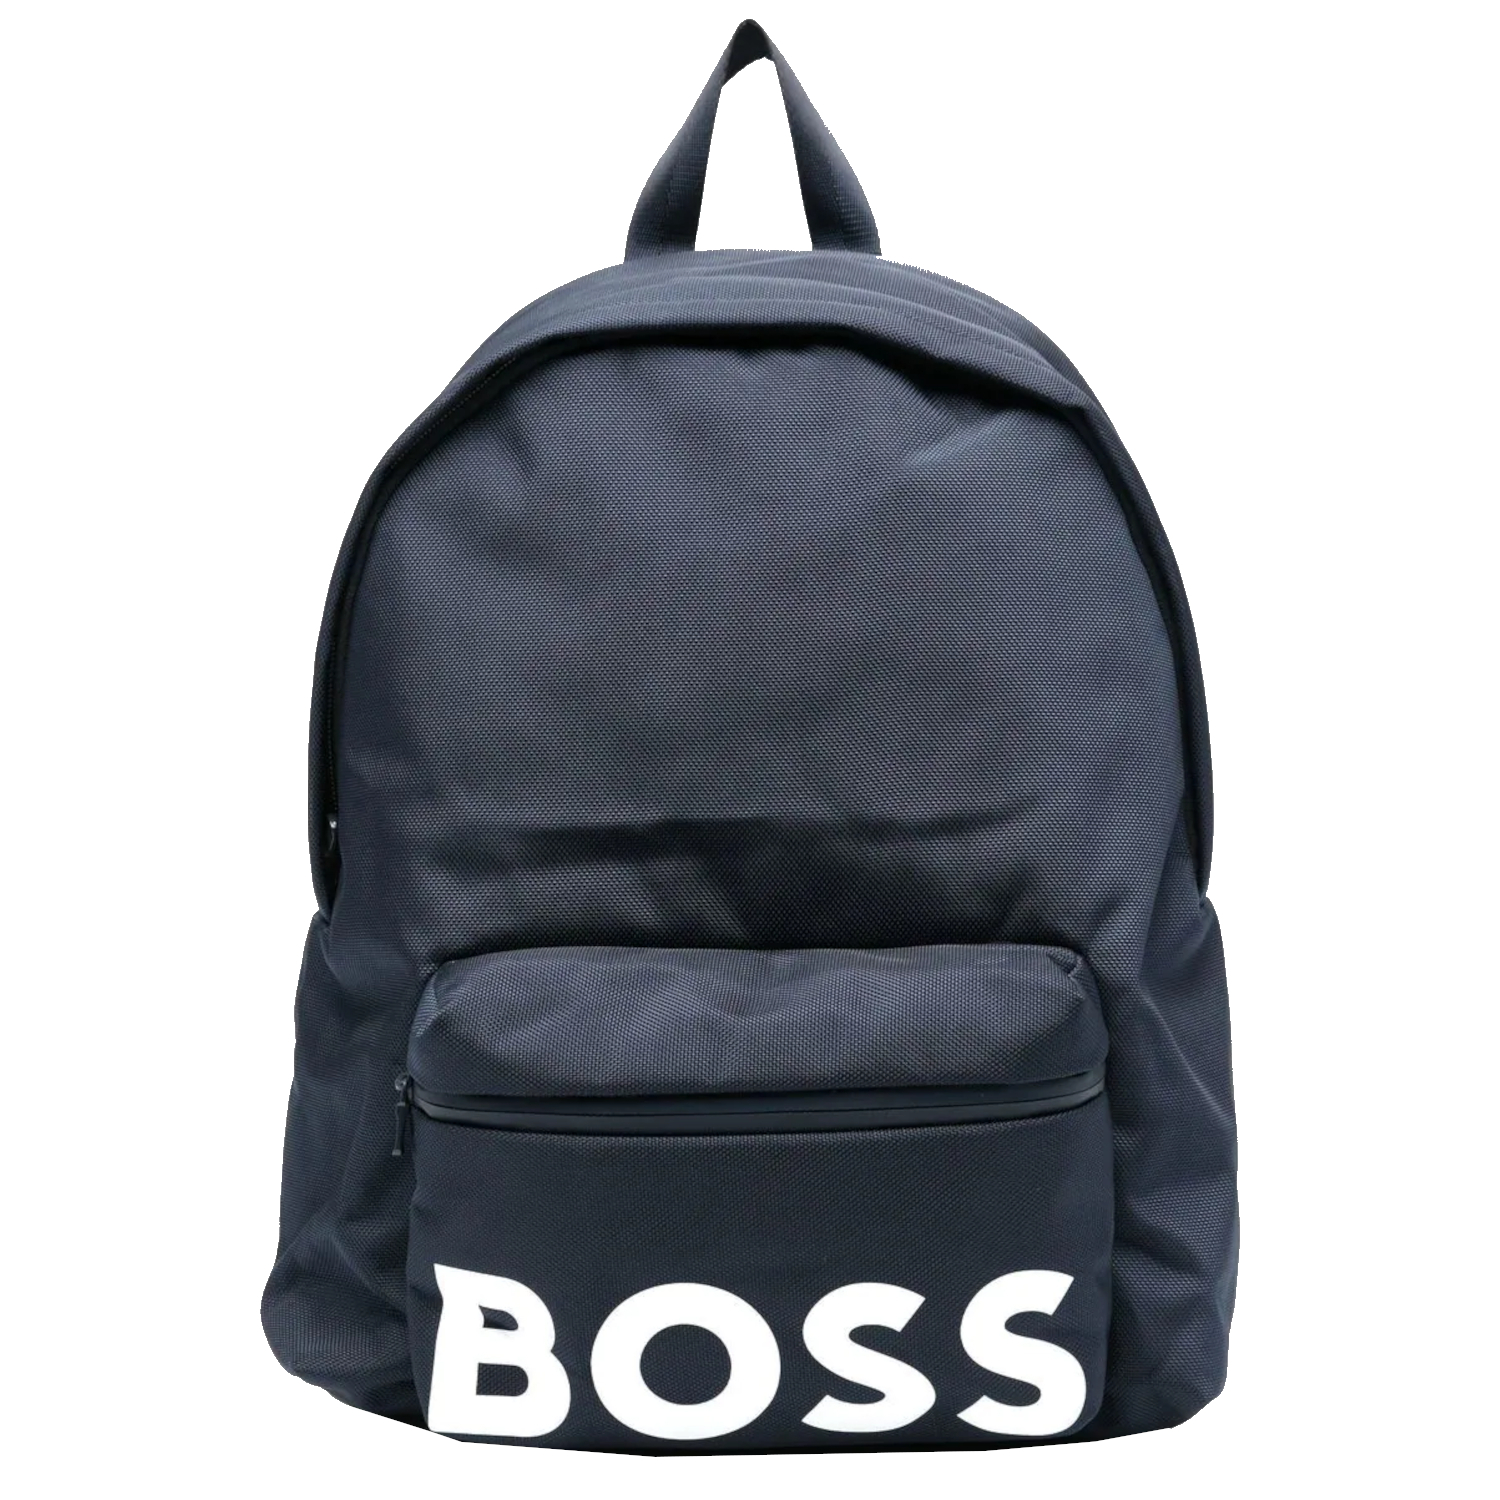 Batoh BOSS Logo Backpack J20372-849 - One size